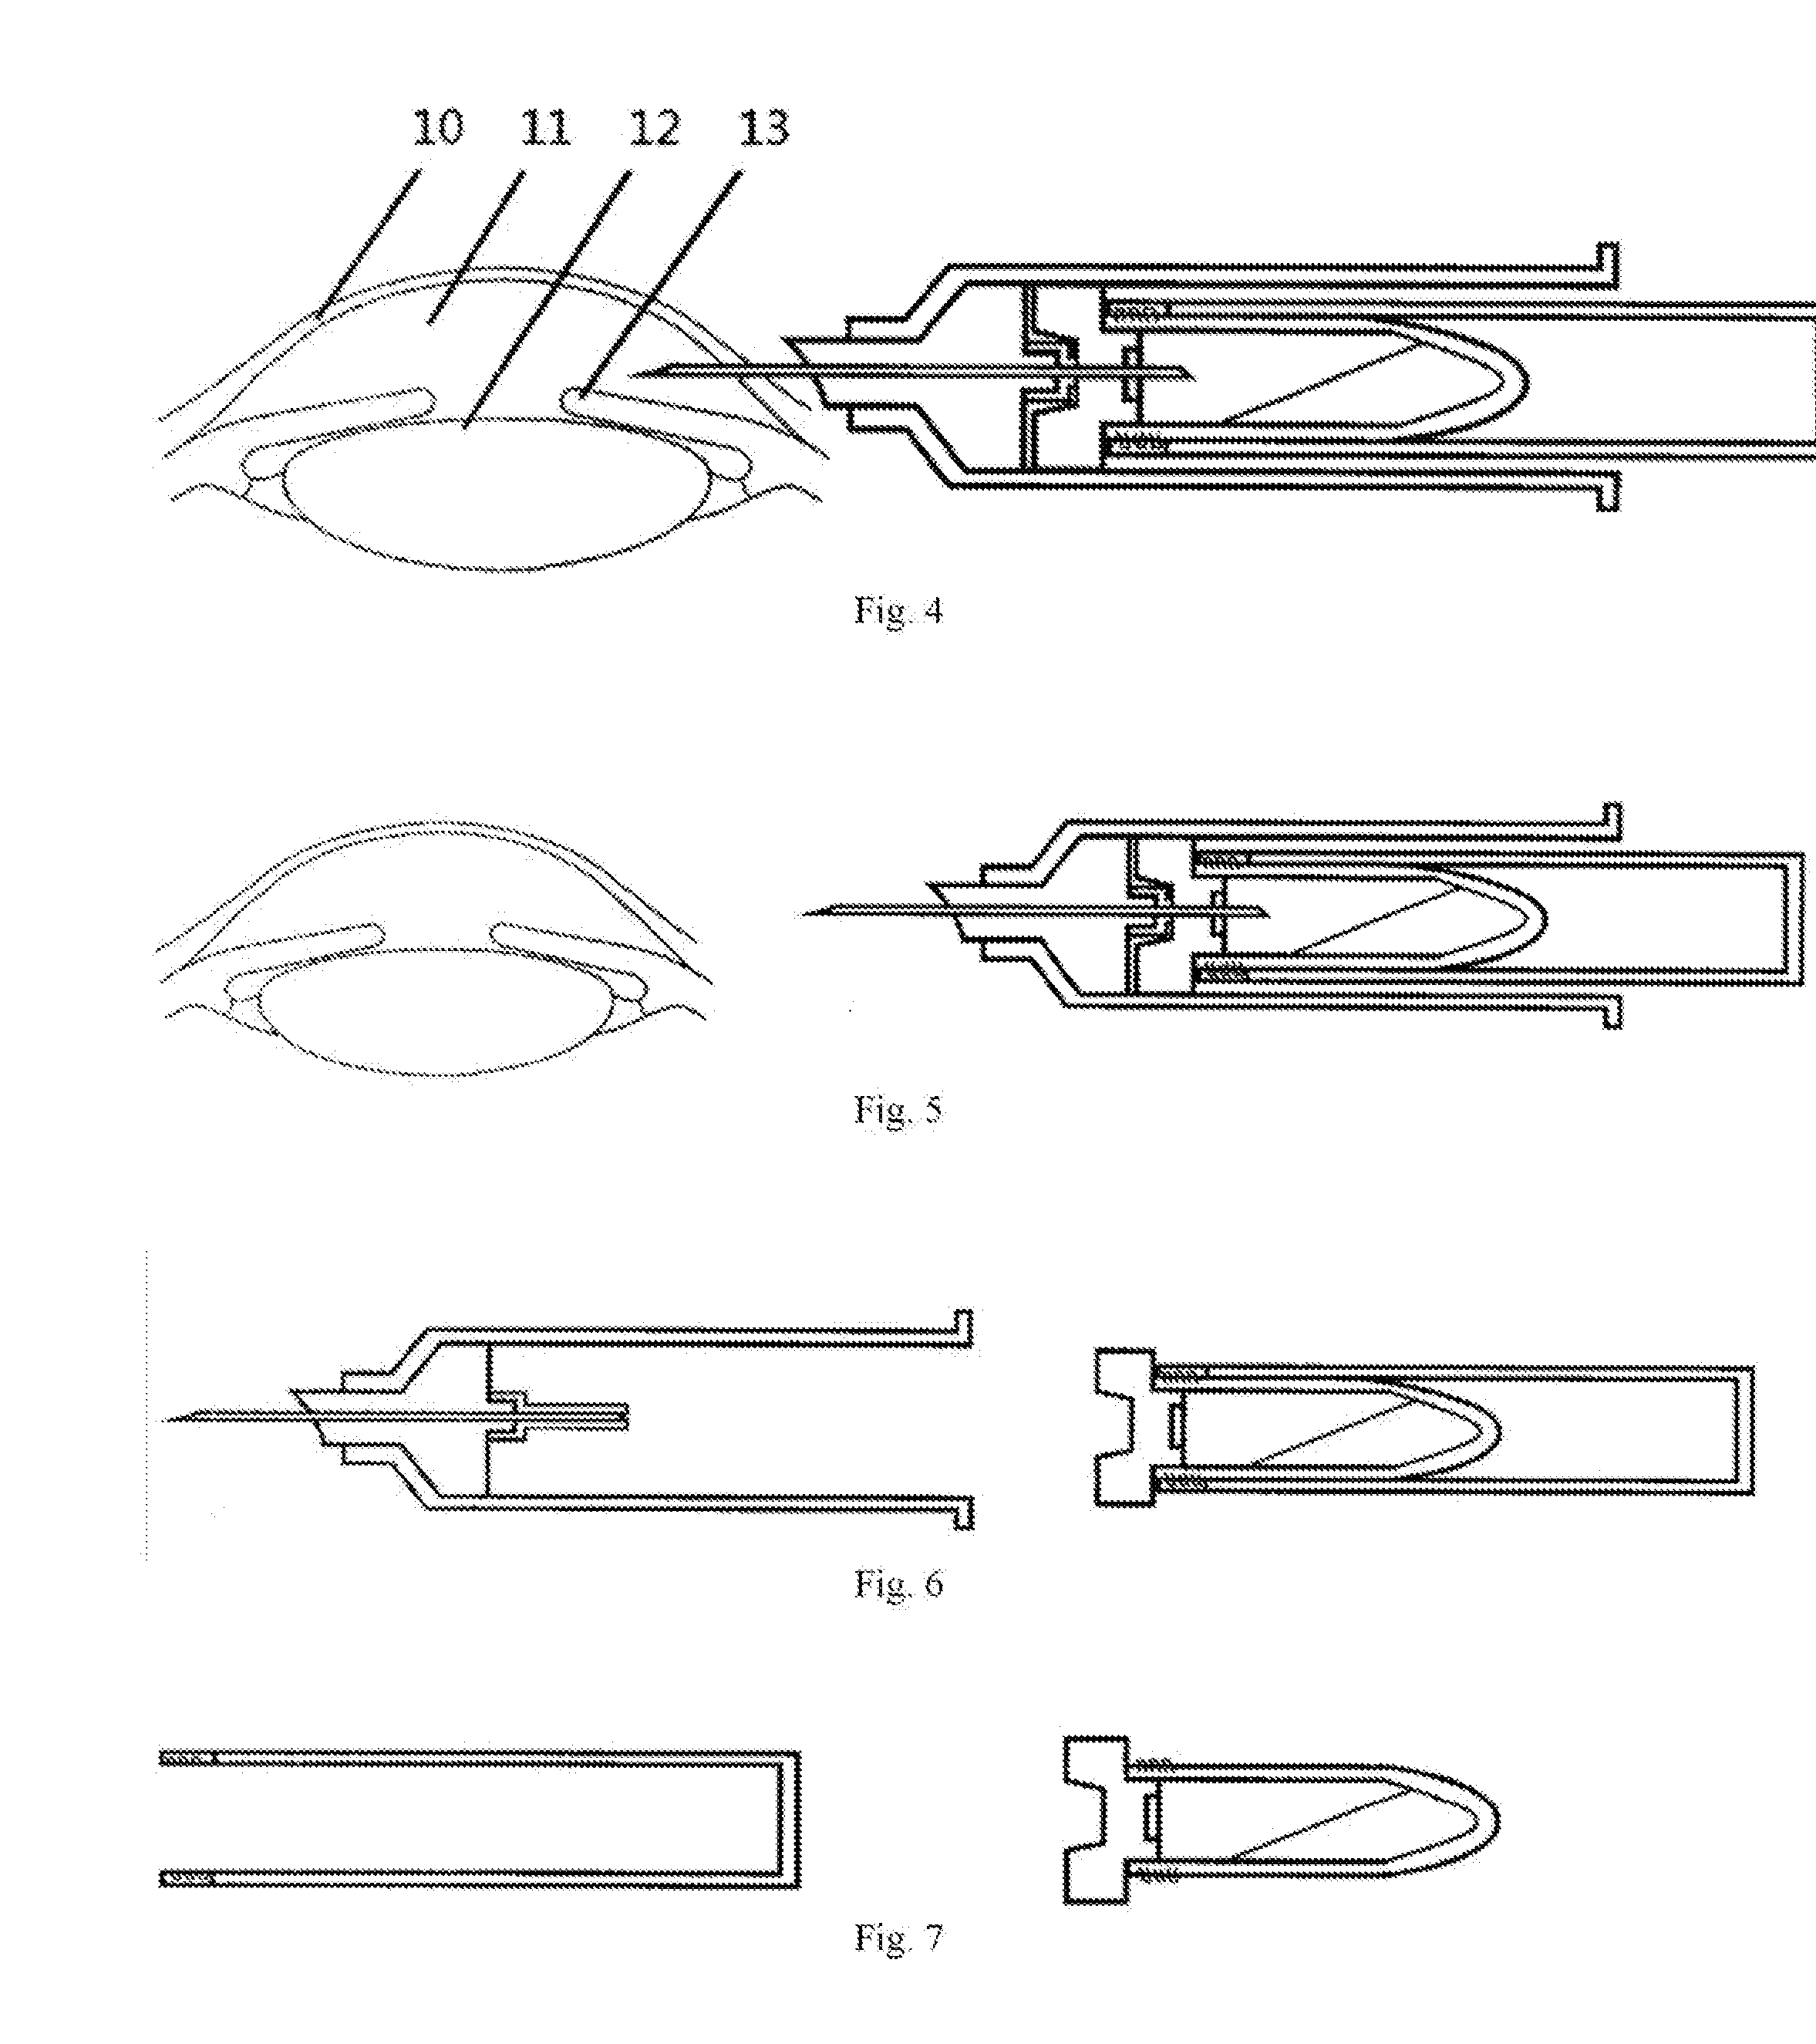 A Disposable Negative-pressure Anterior Chamber Paracentesis syringe